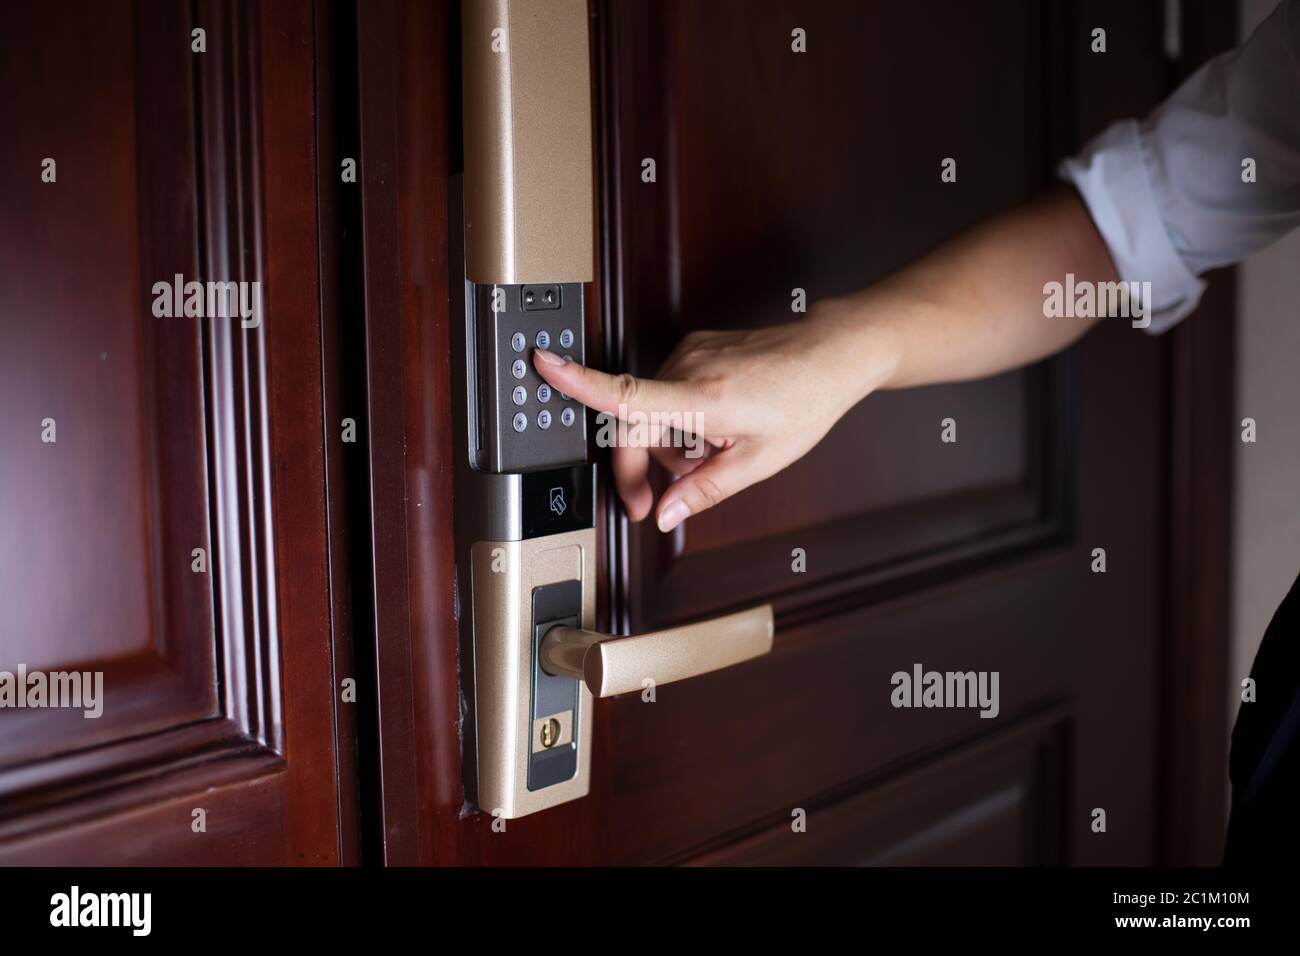 password lock at smart home Stock Photo